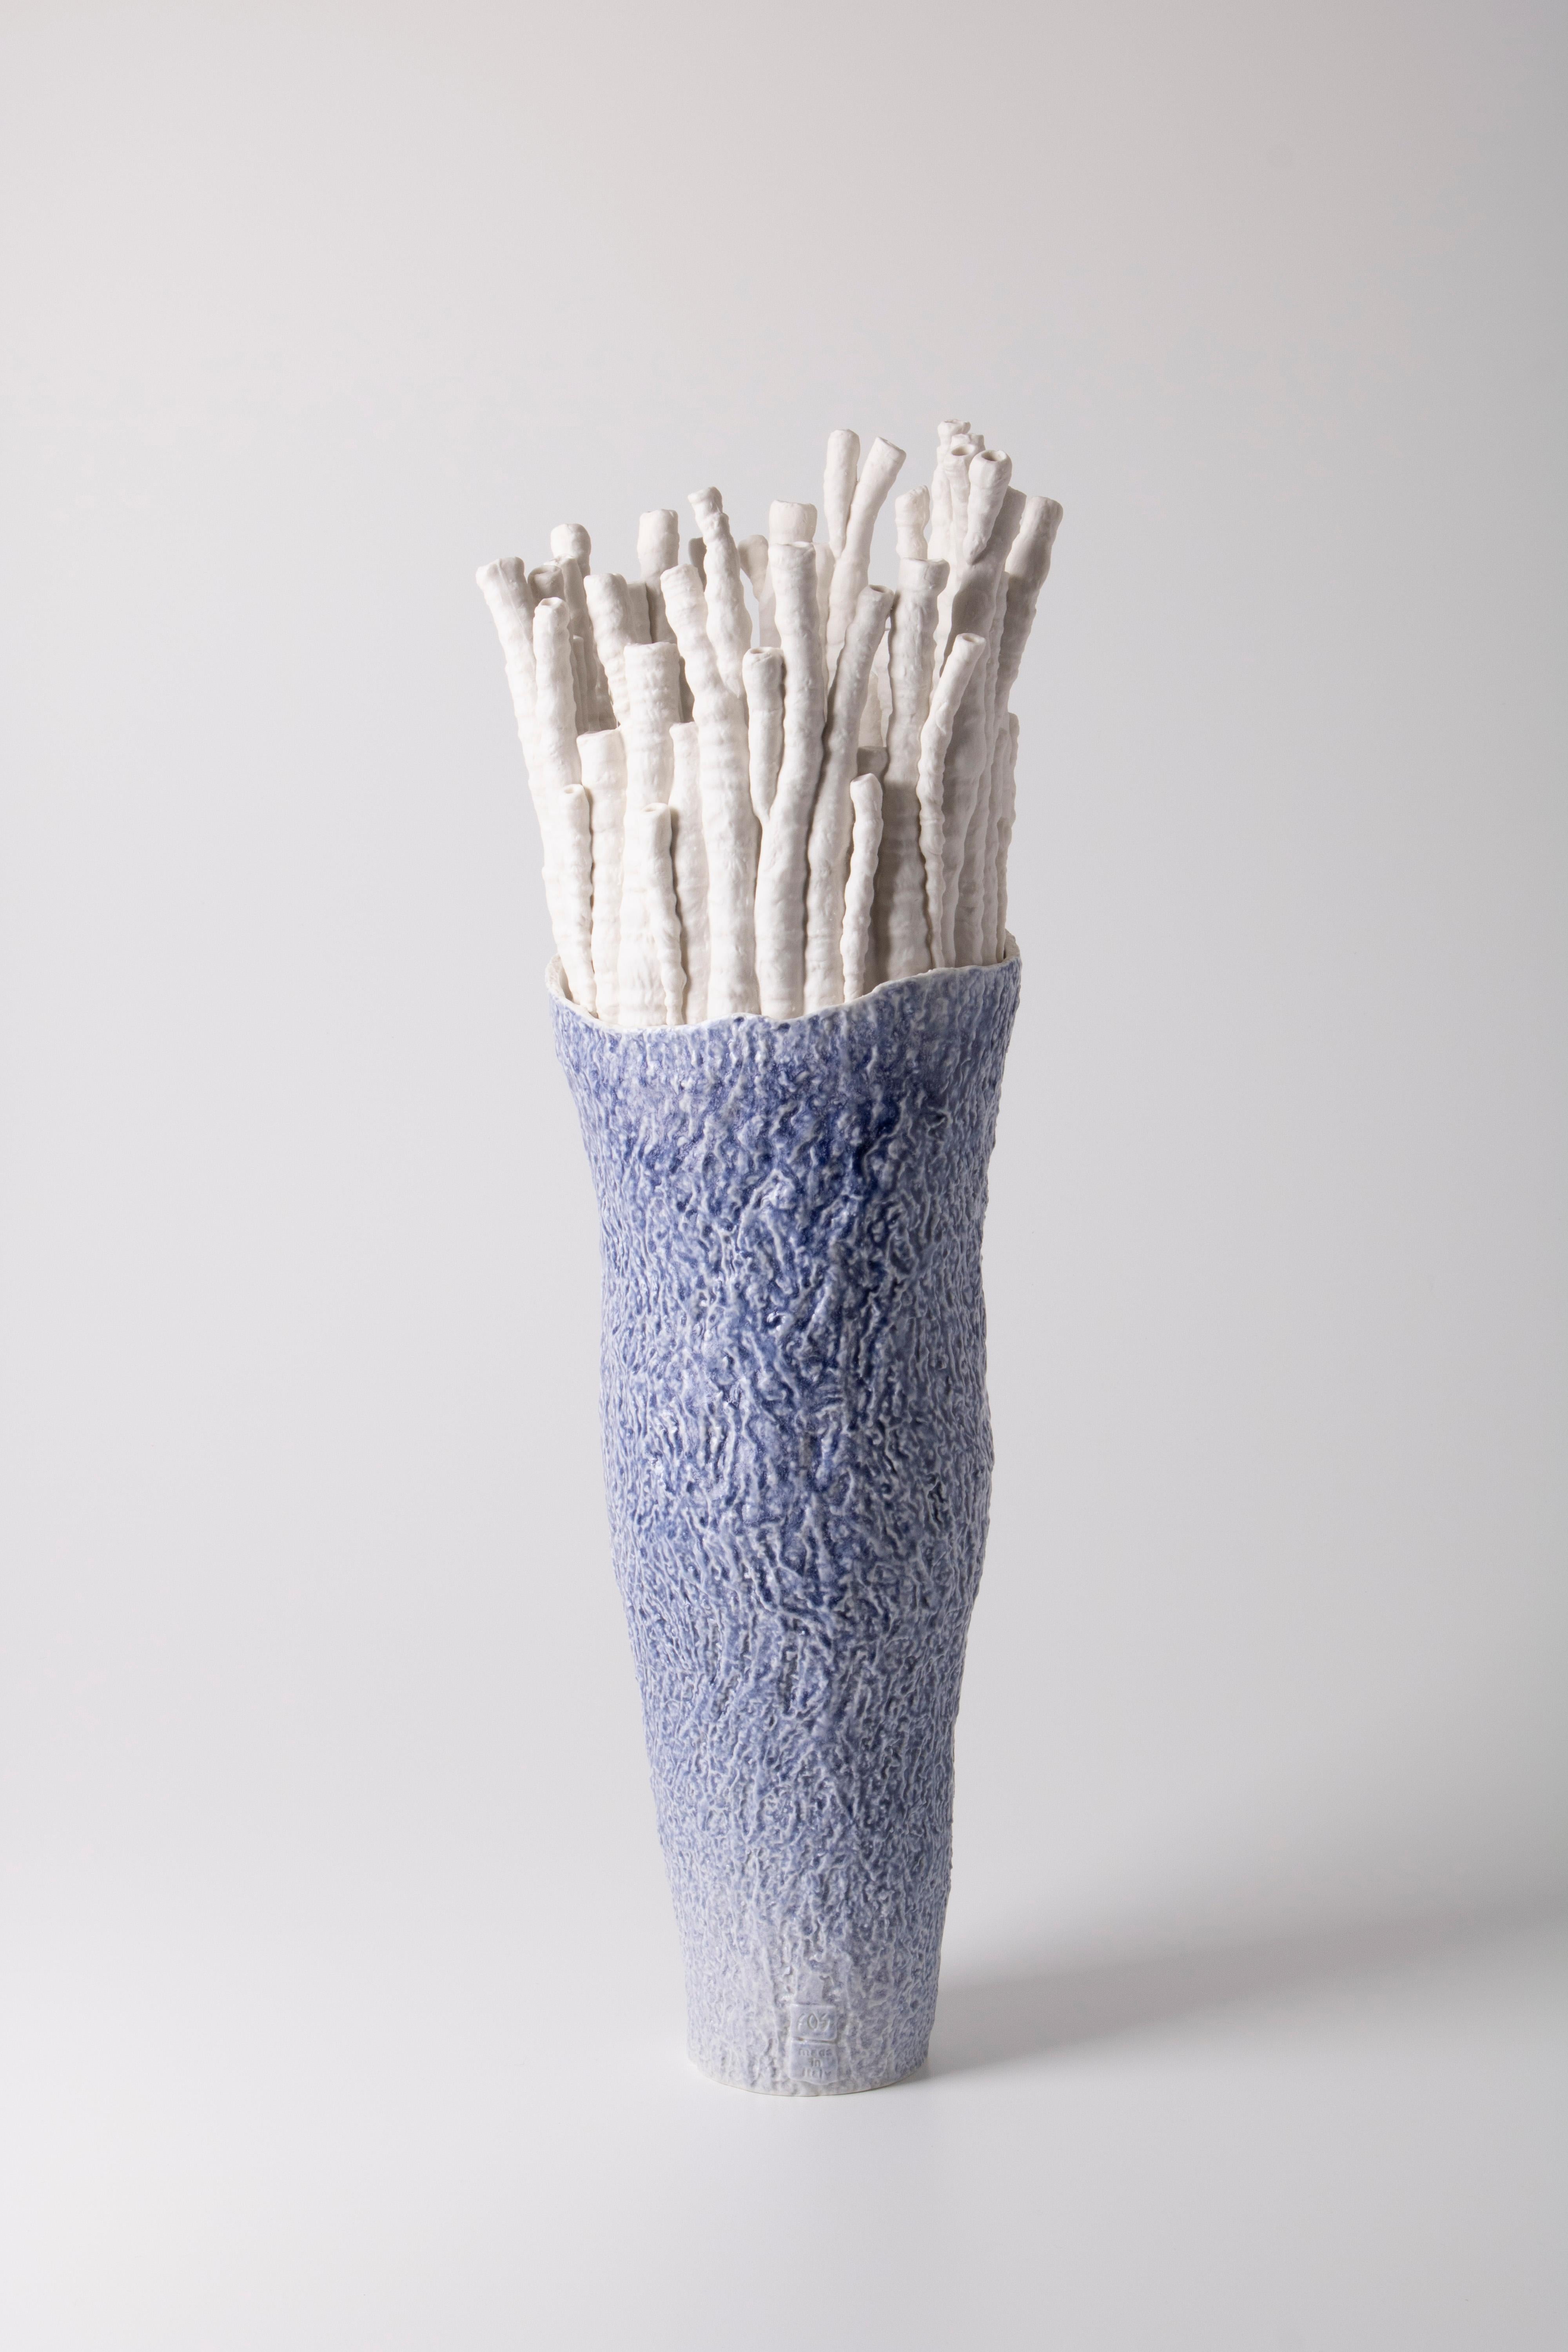 Cast Contemporary Porcelain Blue Vase White Sea Corals Nature Ceramic Handmade Fos